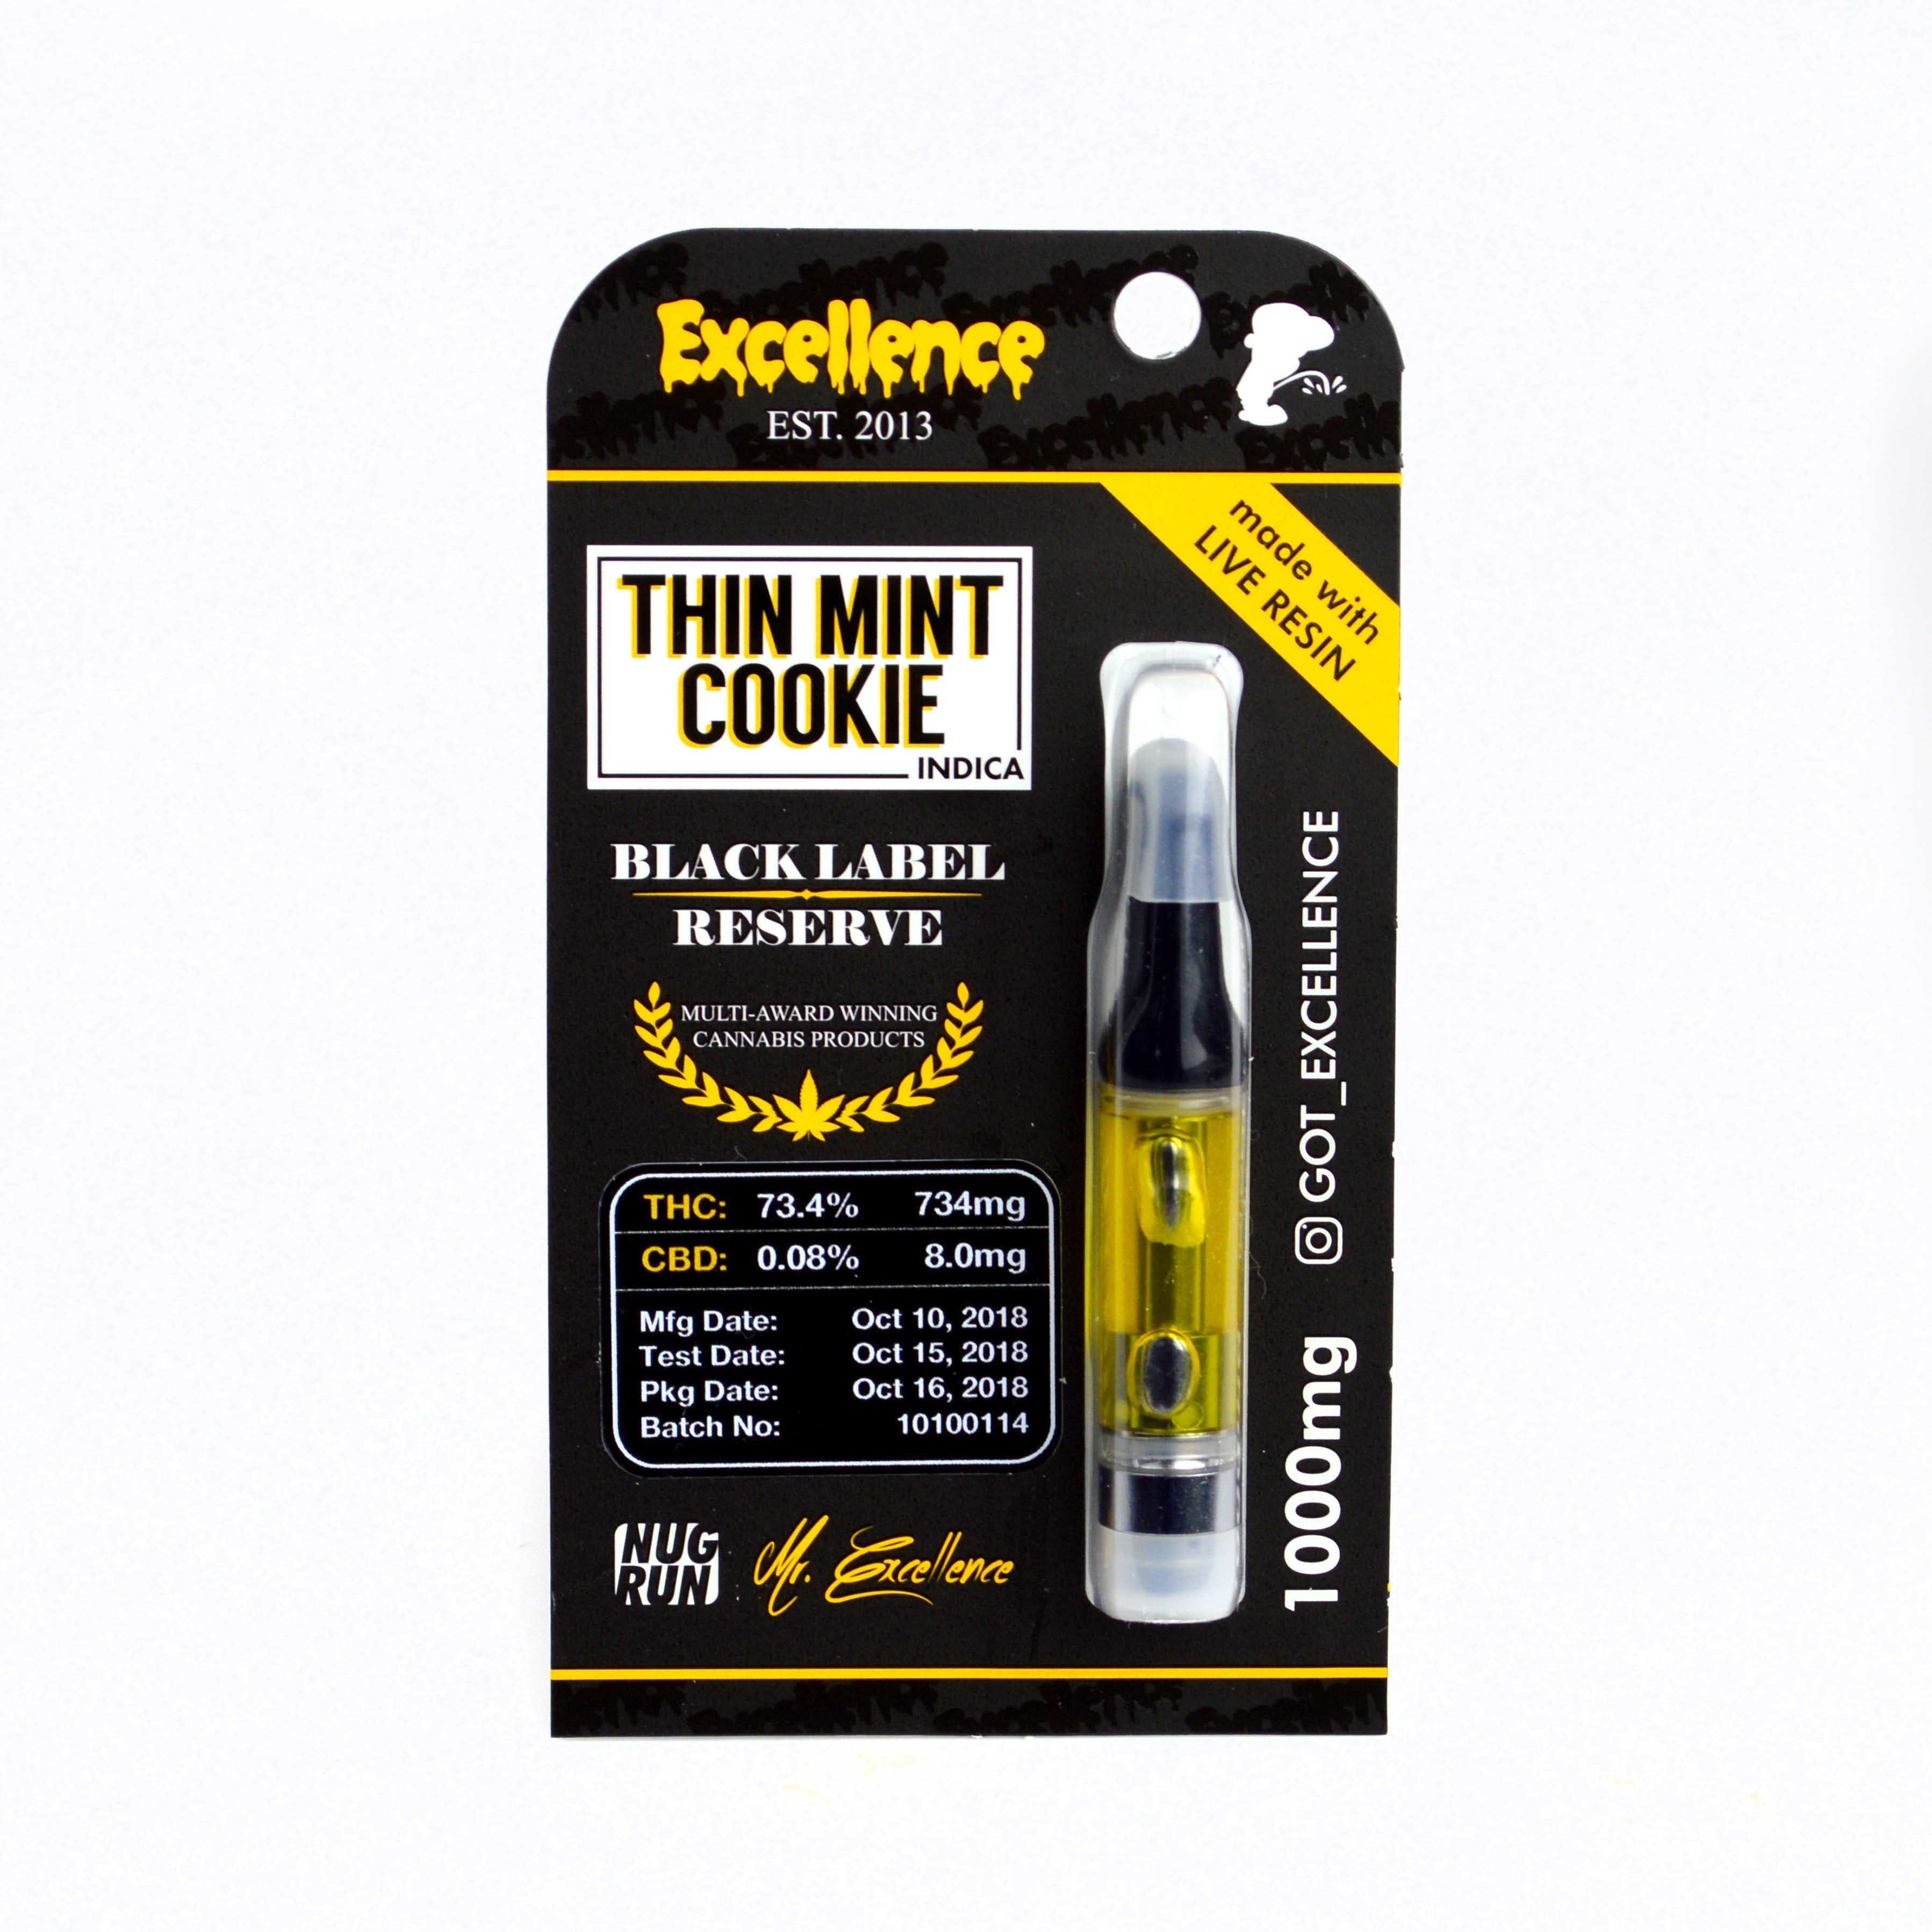 Thin Mint Cookie - Black Label Reserve